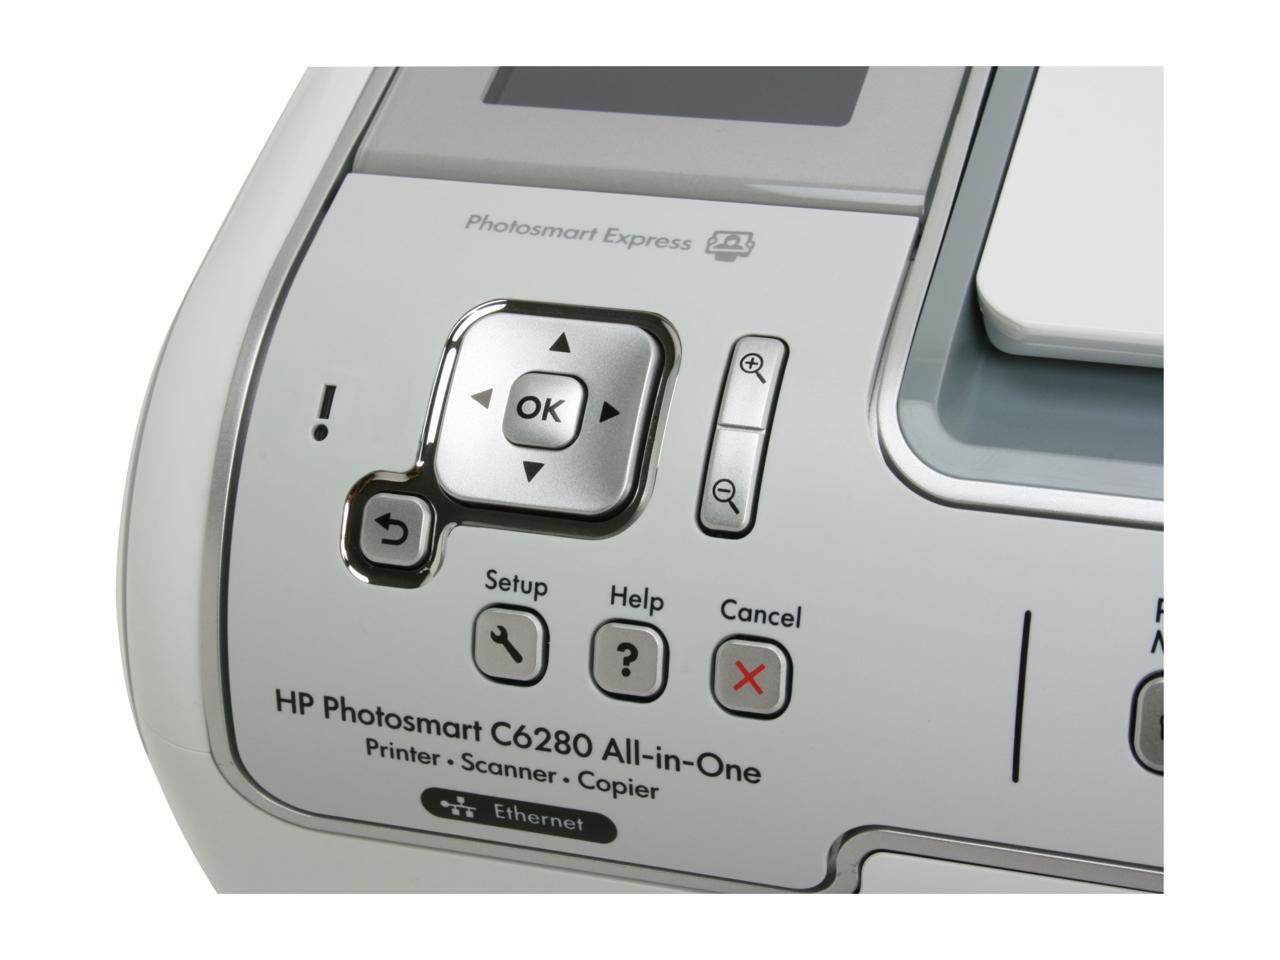 hp photosmart c6280 all-in-one printer manual